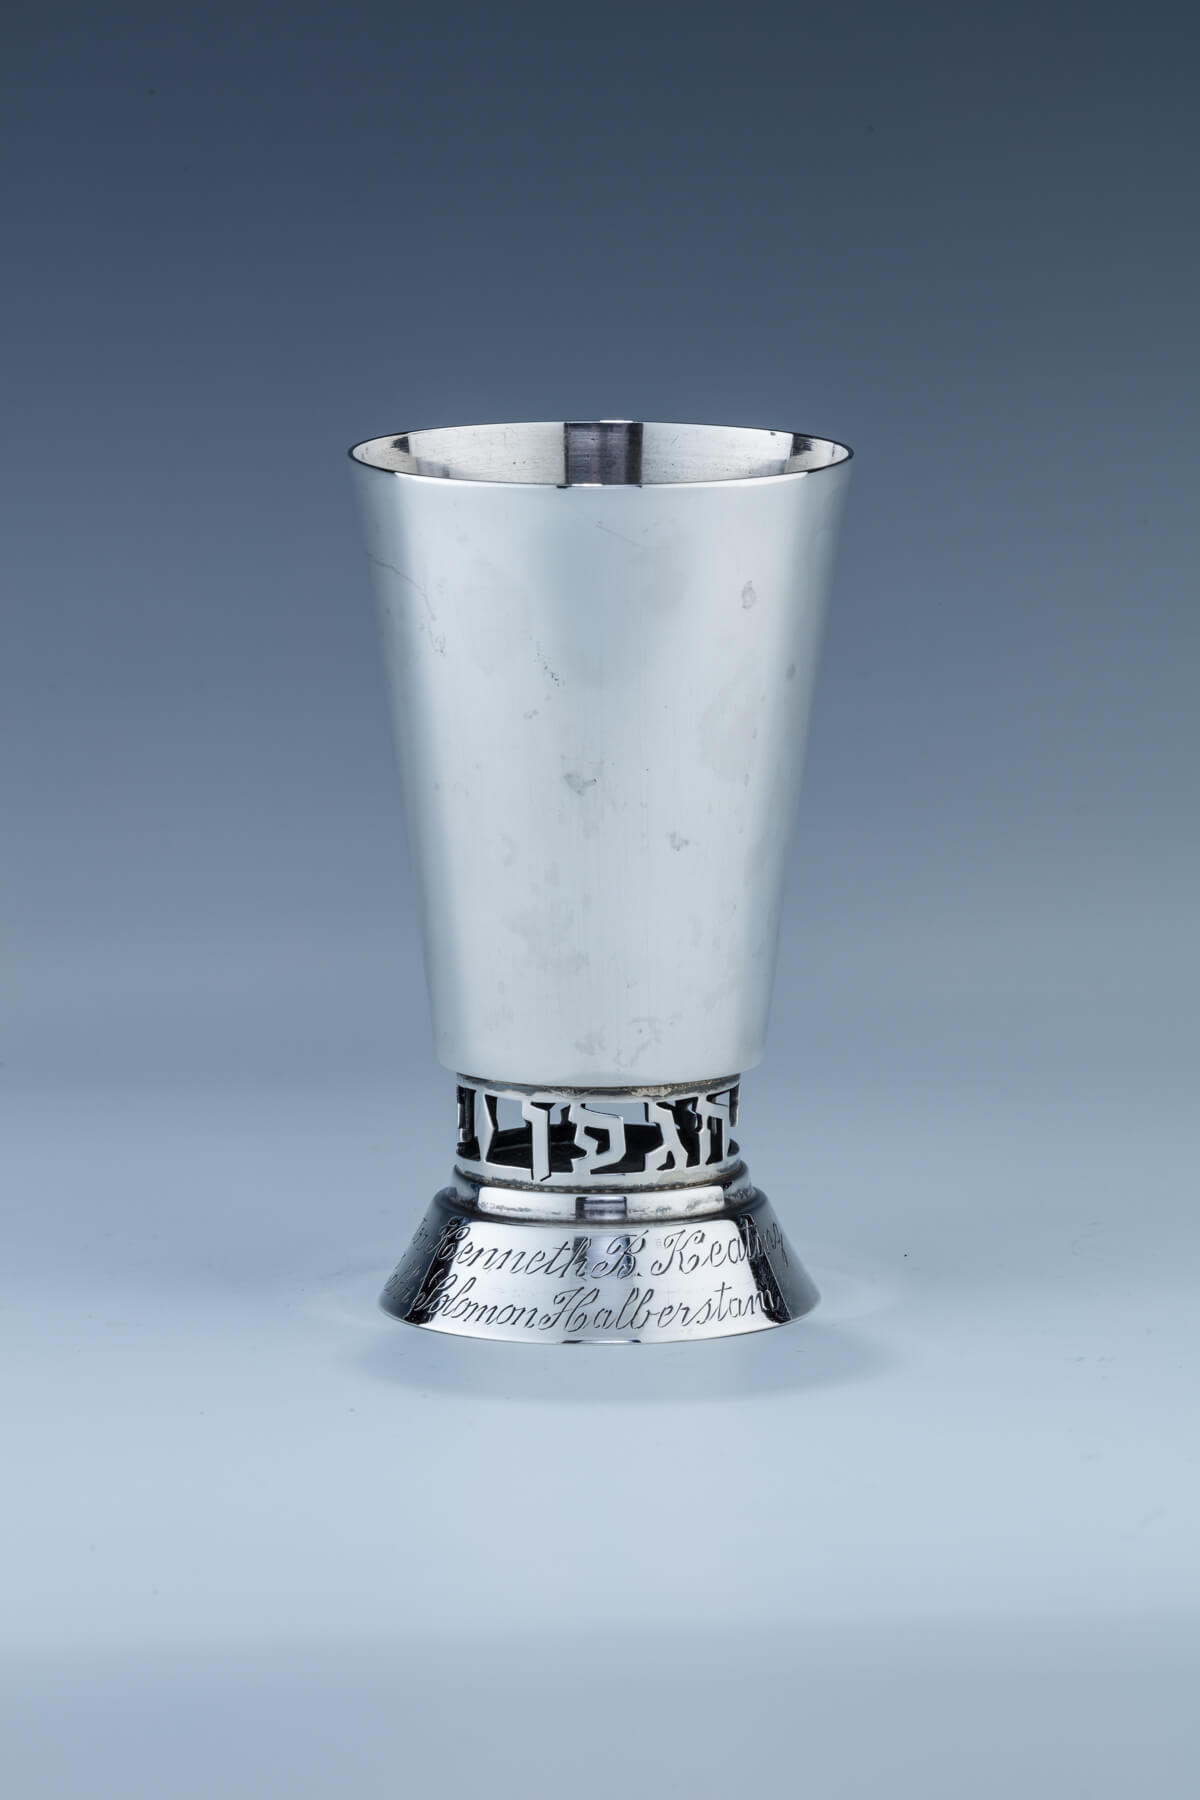 134. An Important Sterling Silver Cup Given From Rabbi Shlomo Halberstam To Senator Kenneth B. Keating